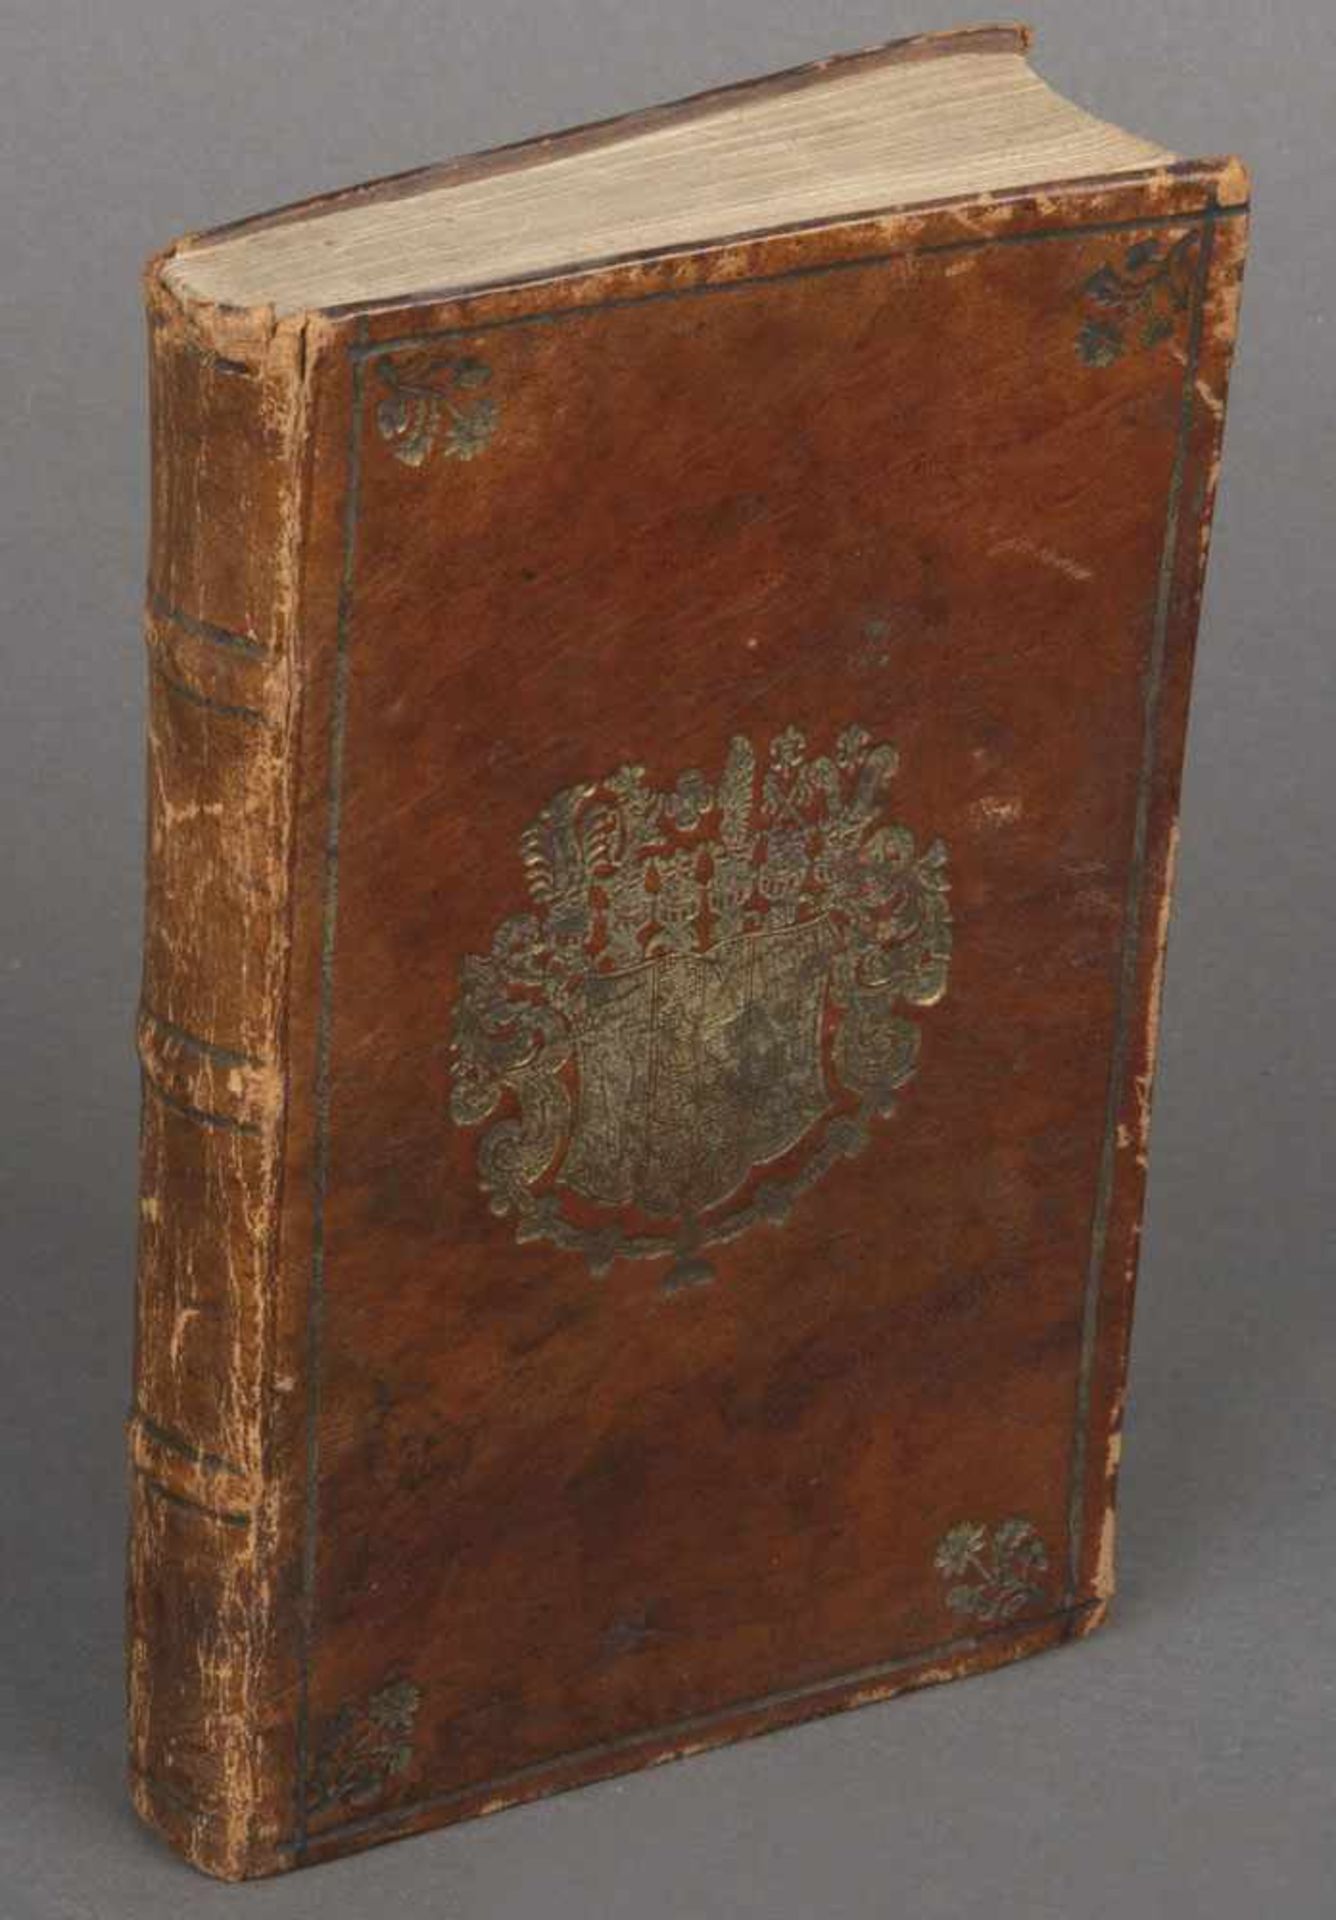 Thomas Paine, Das Zeitalter der Vernunft - Zweyter Teil, geprägter Ganzlederband, Paris 1796. - Bild 2 aus 2